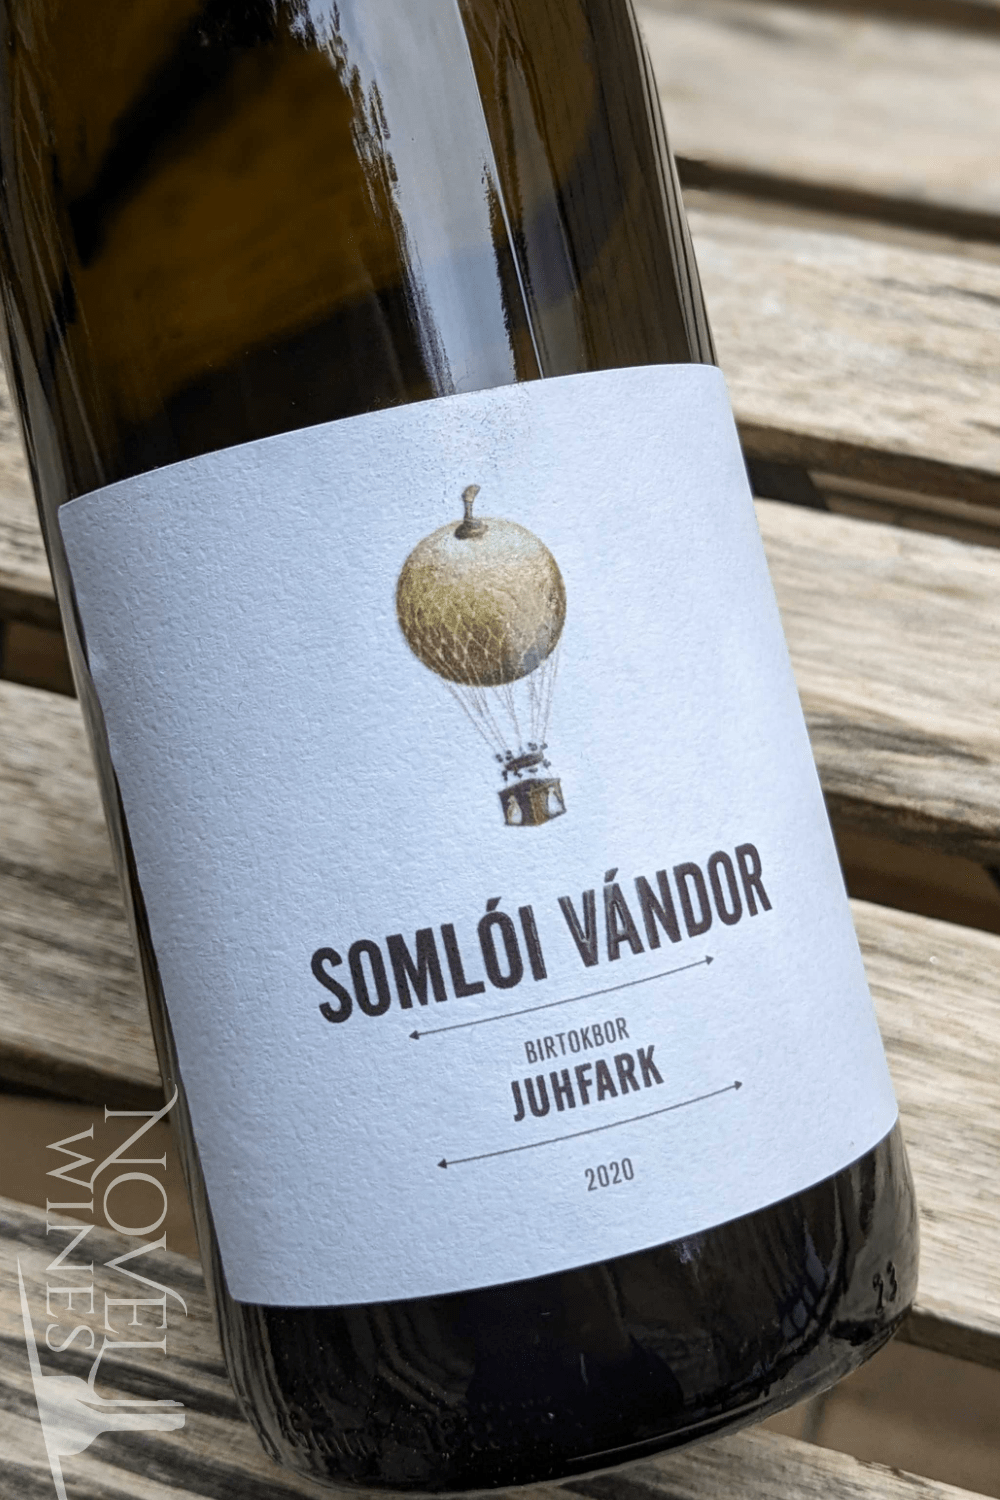 Somloi Vandor White Wine Somloi Vandor Nagy-Somloi Juhfark 2020, Hungary